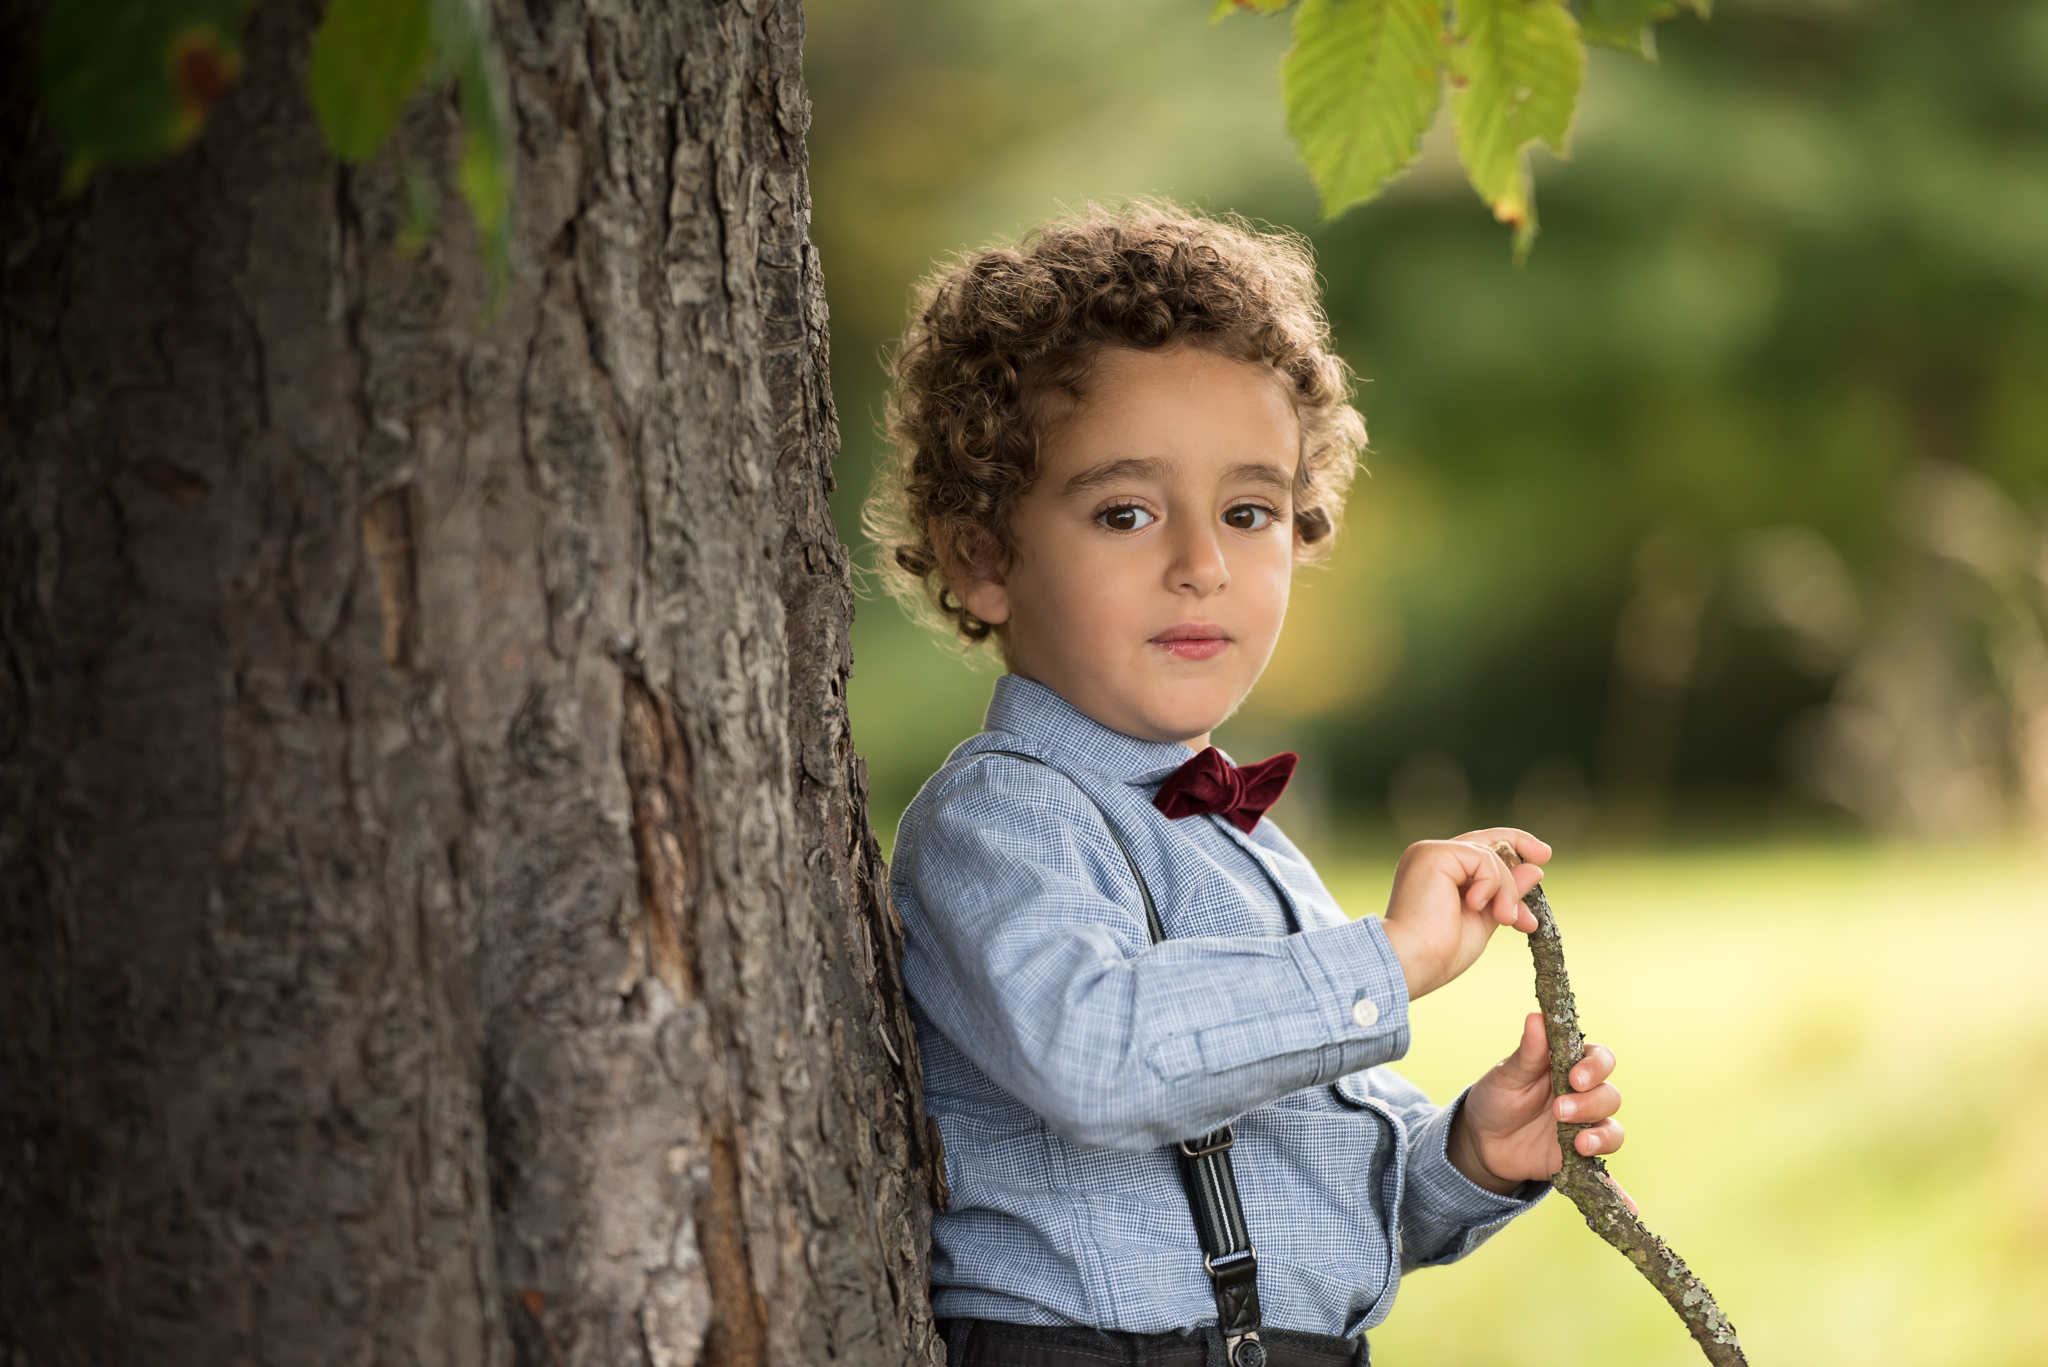 Family portraits Edinburgh - little boy with bow tie standing under tree